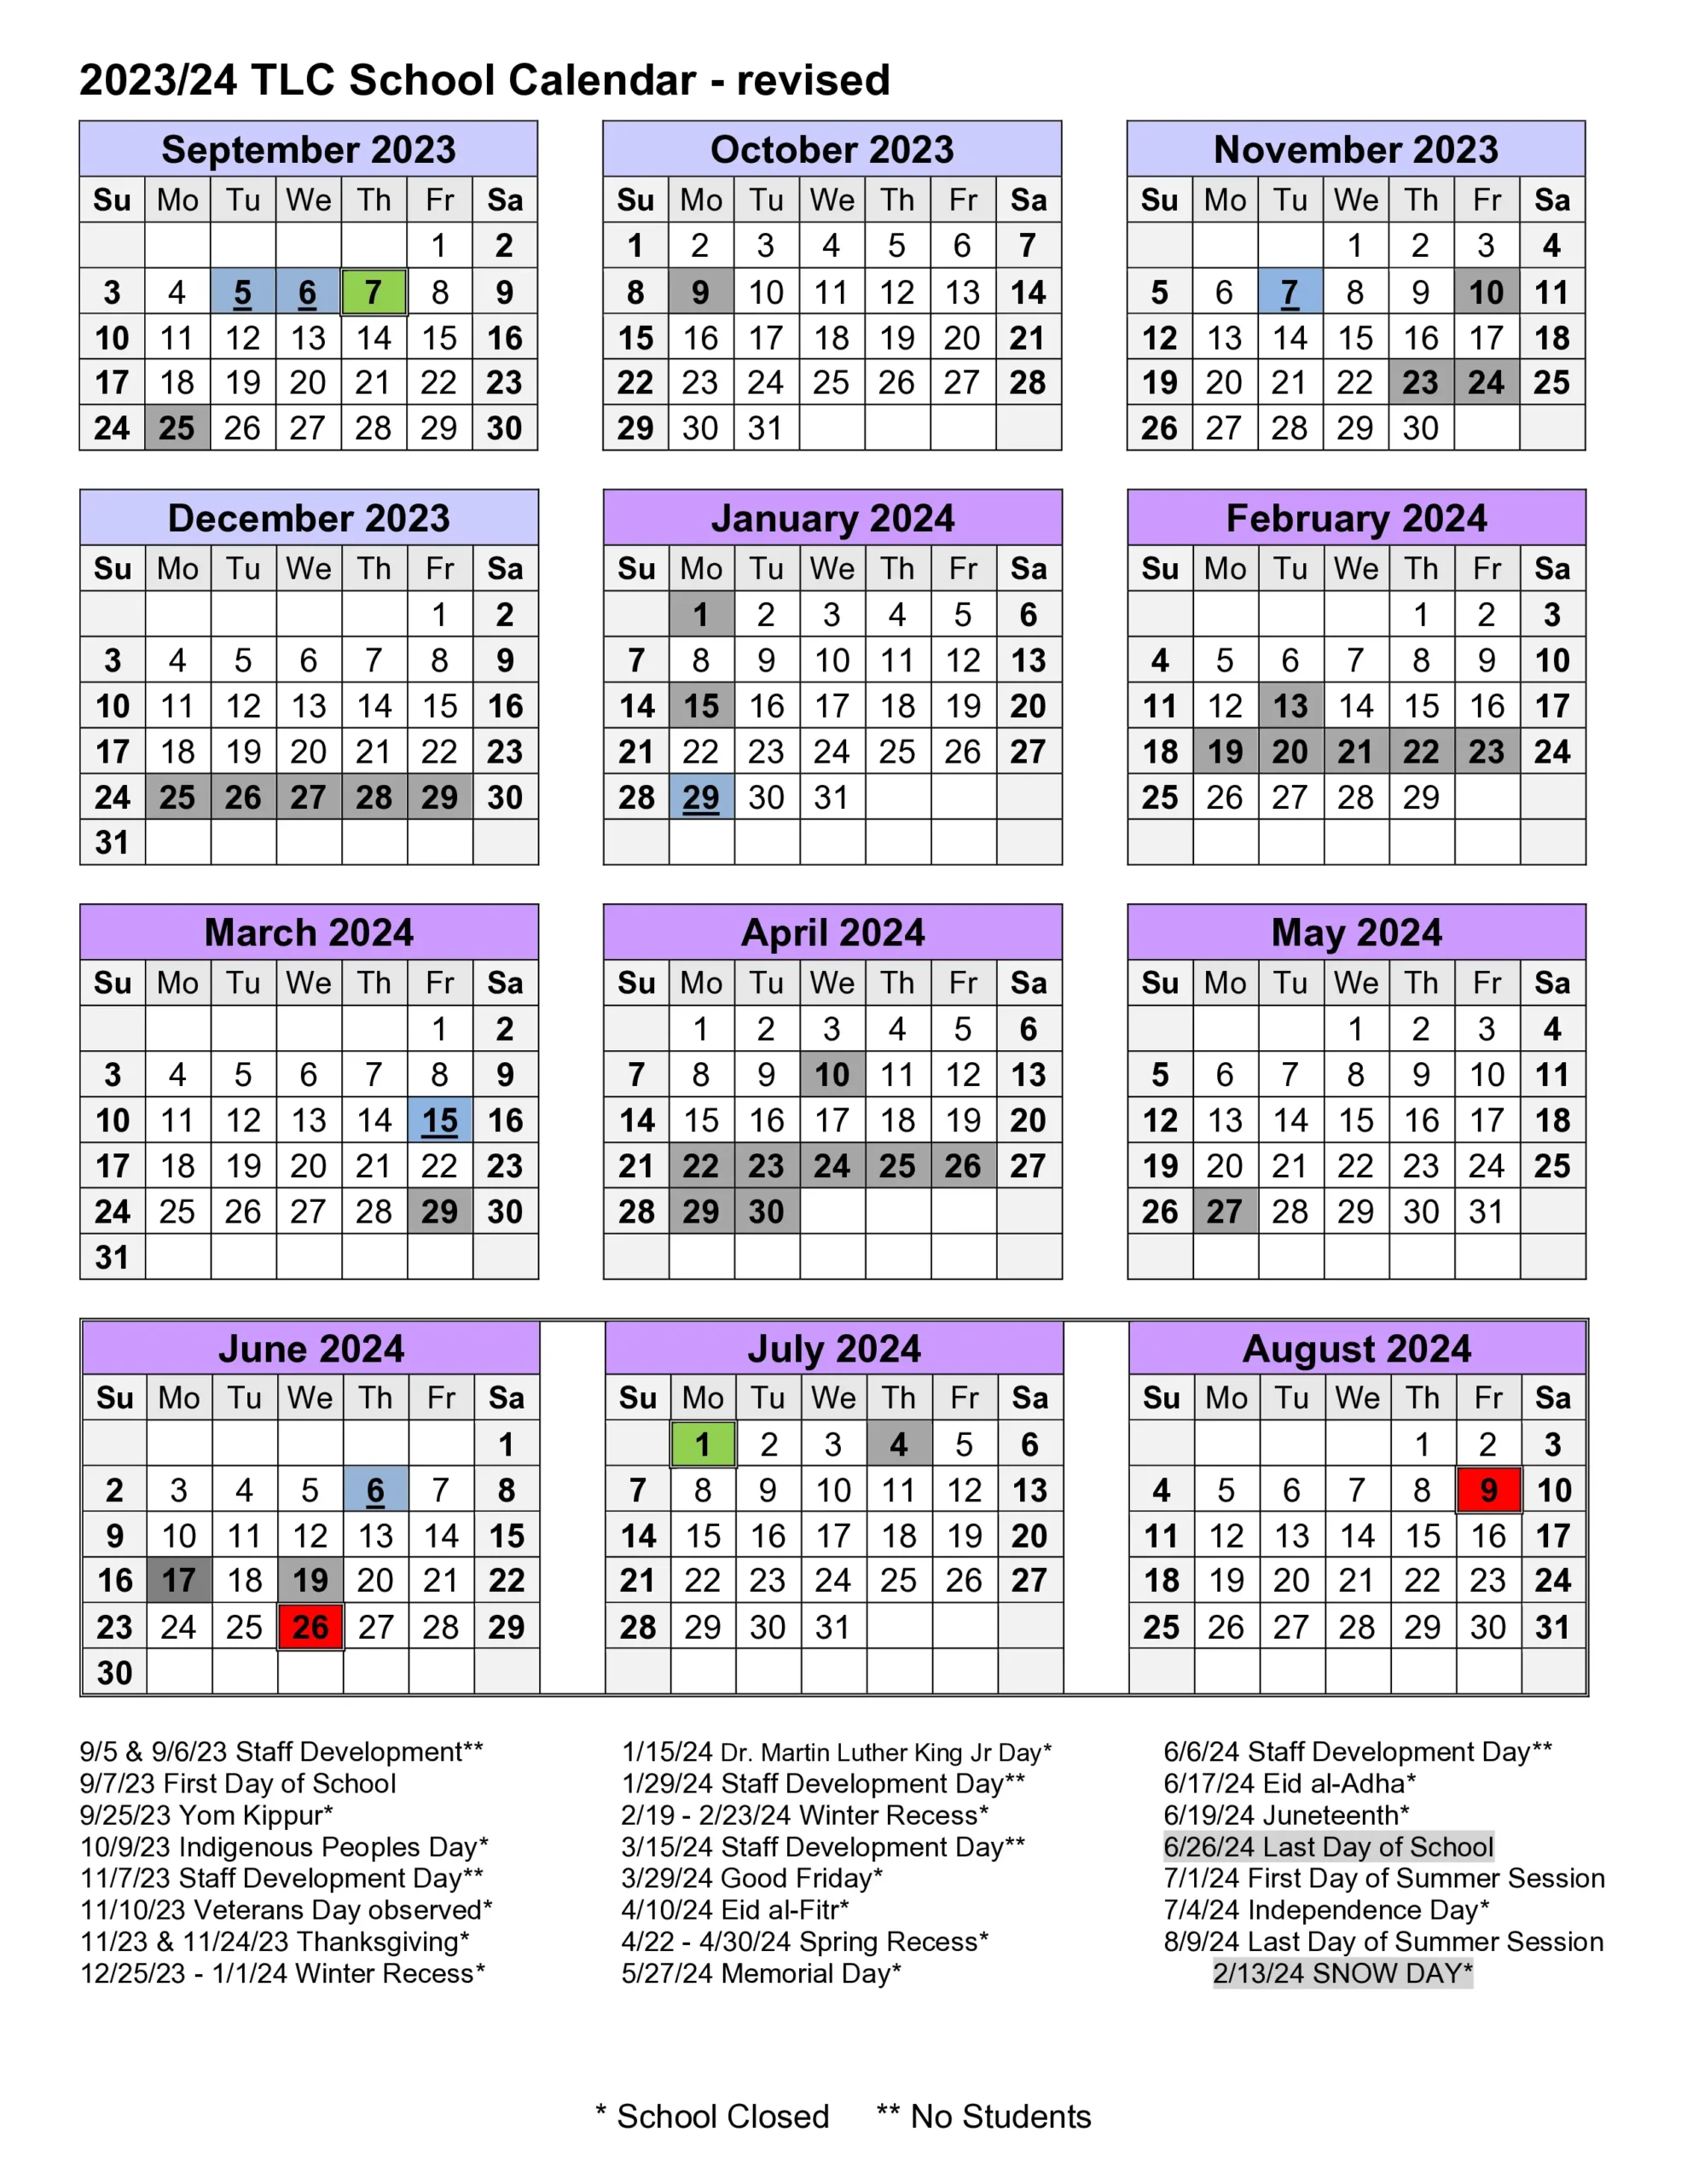 Academic Calendar 2023-24 Revised